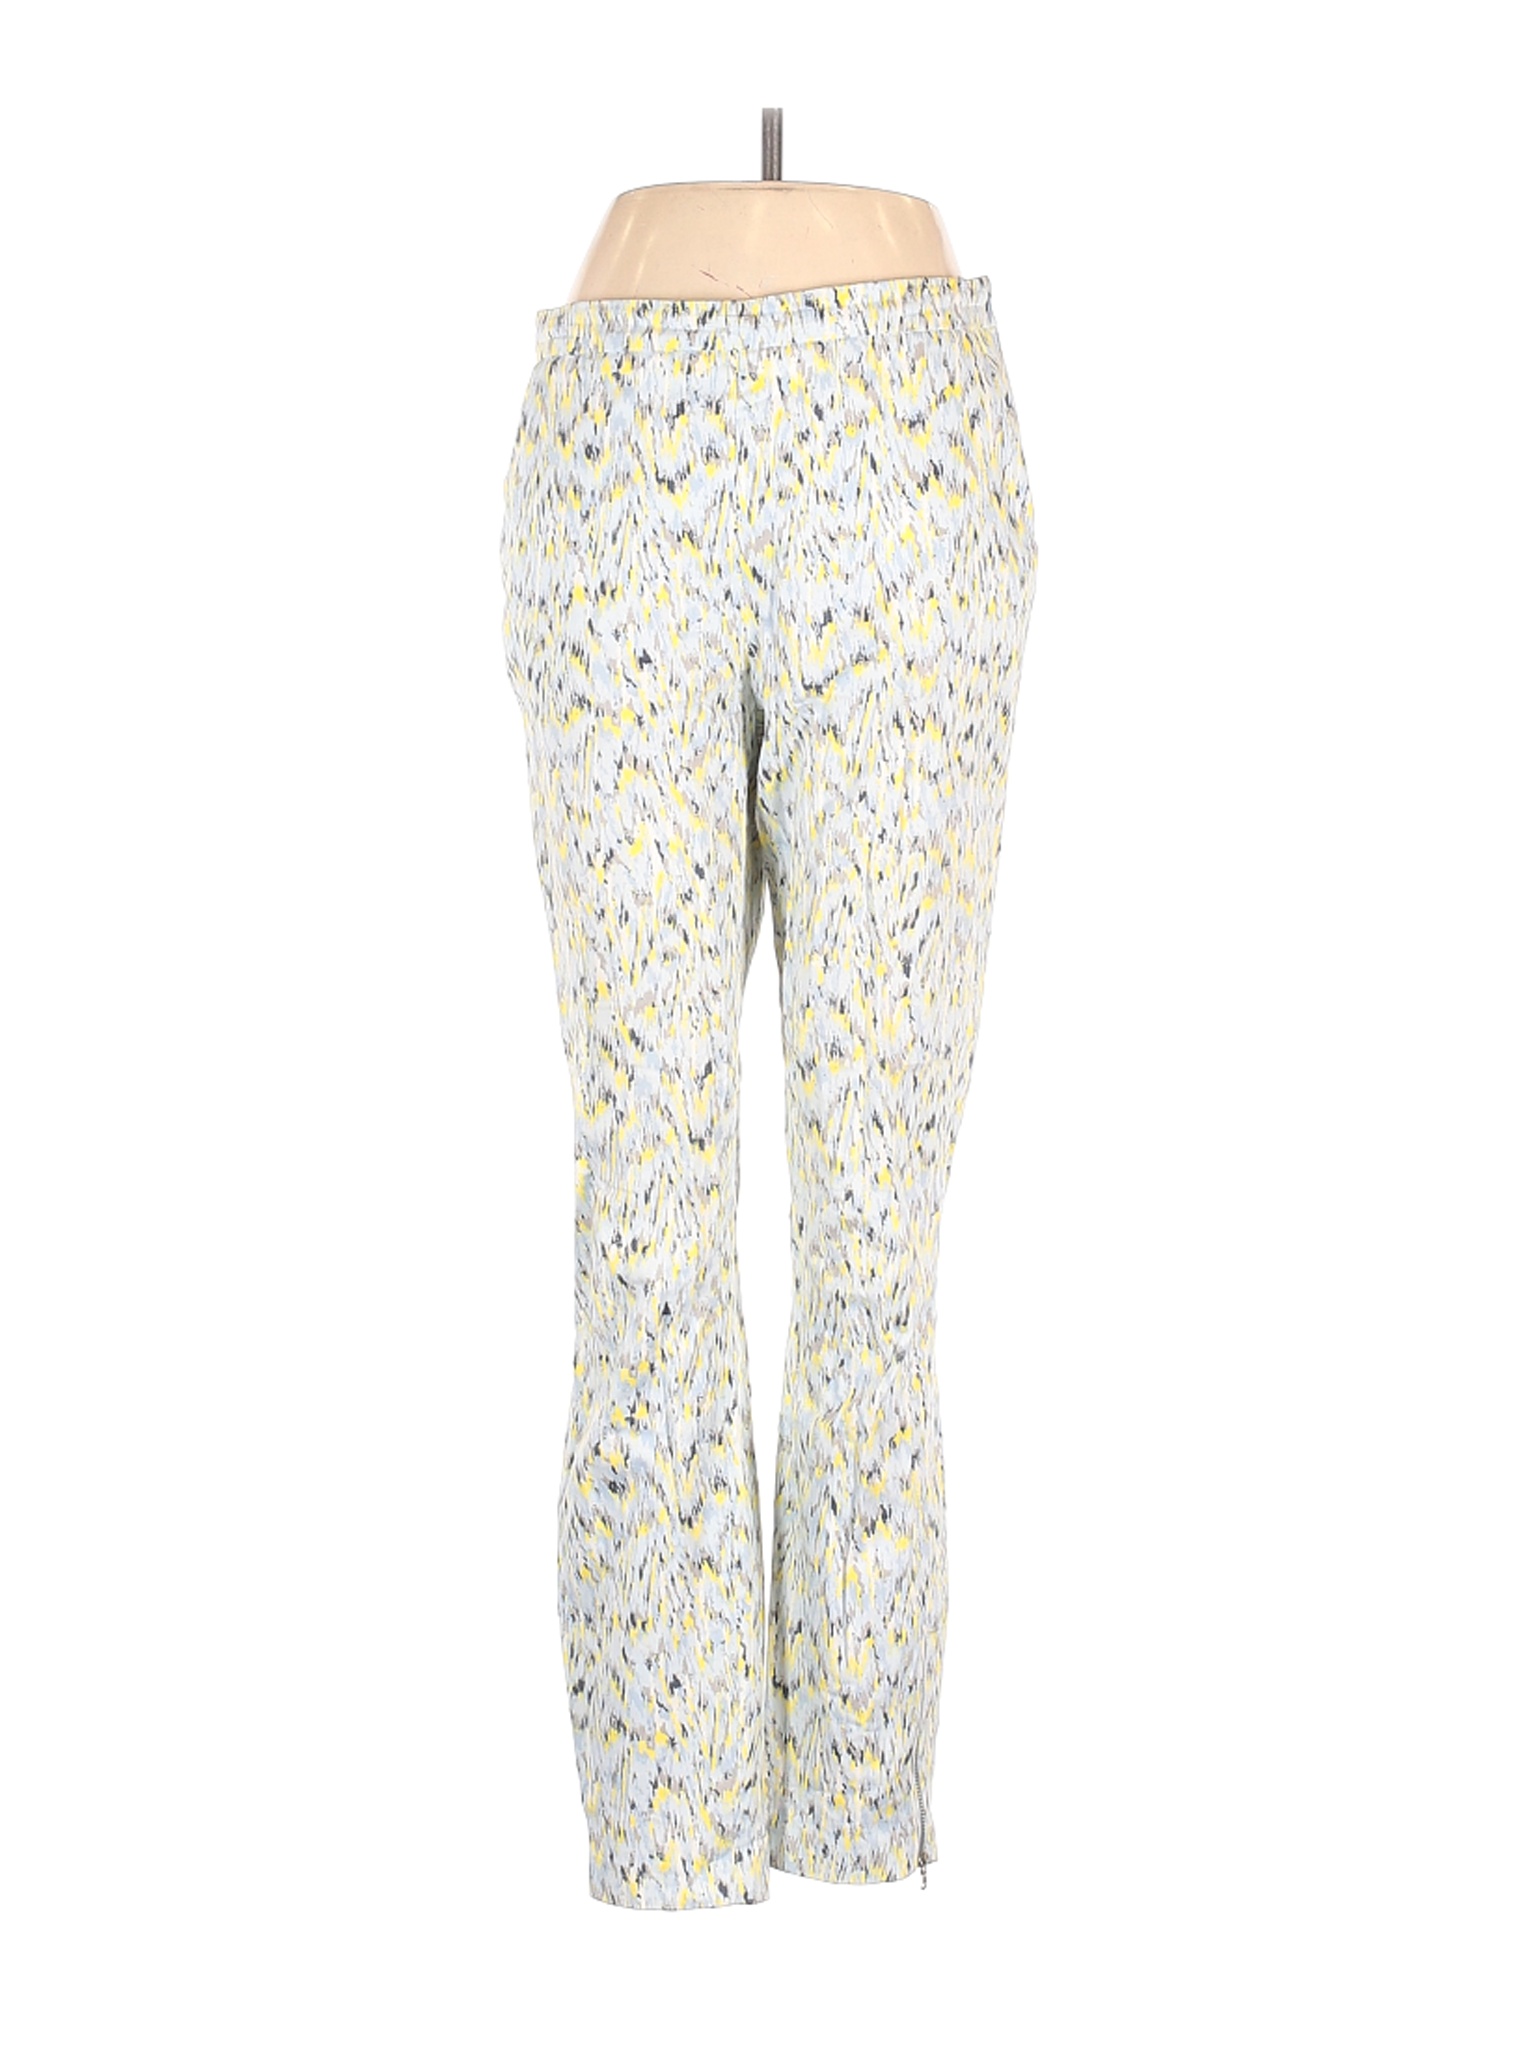 Zara Basic Women White Casual Pants M | eBay